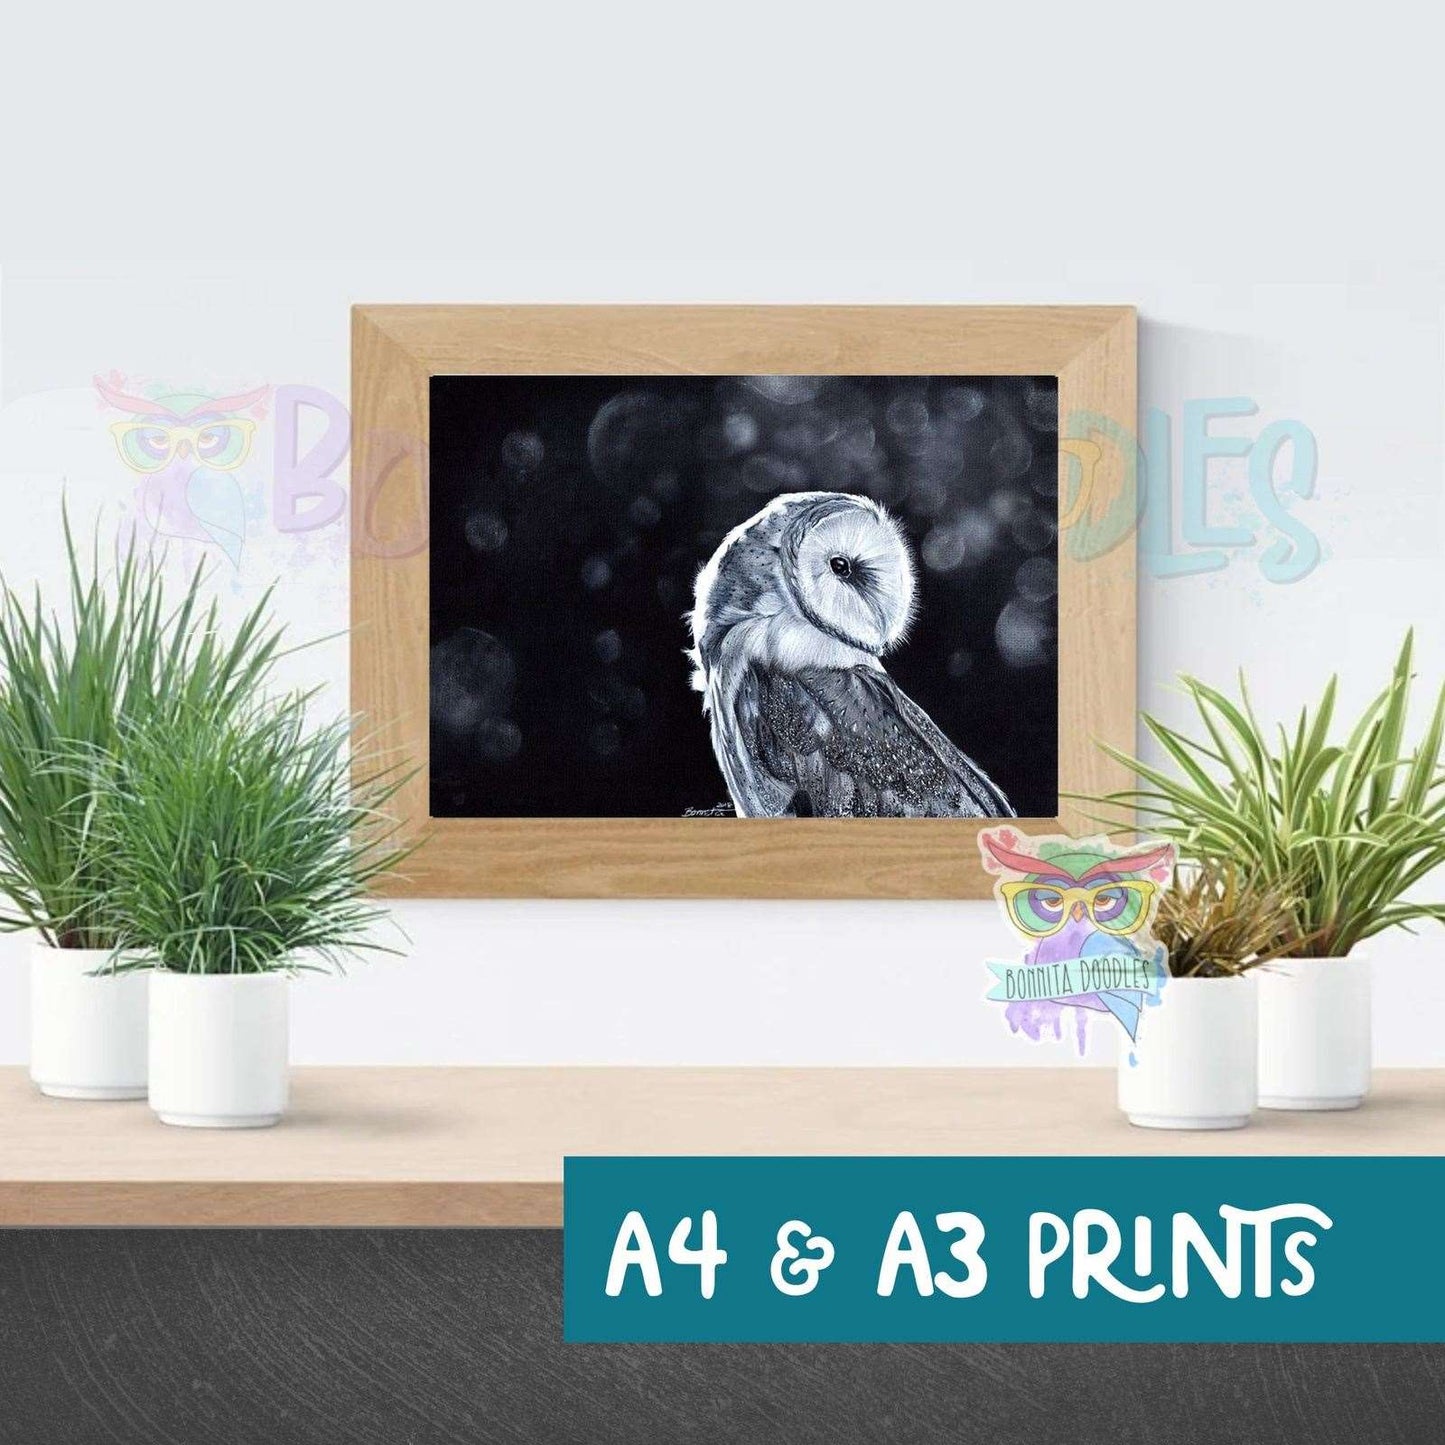 Moonlight Owl - art home decor print